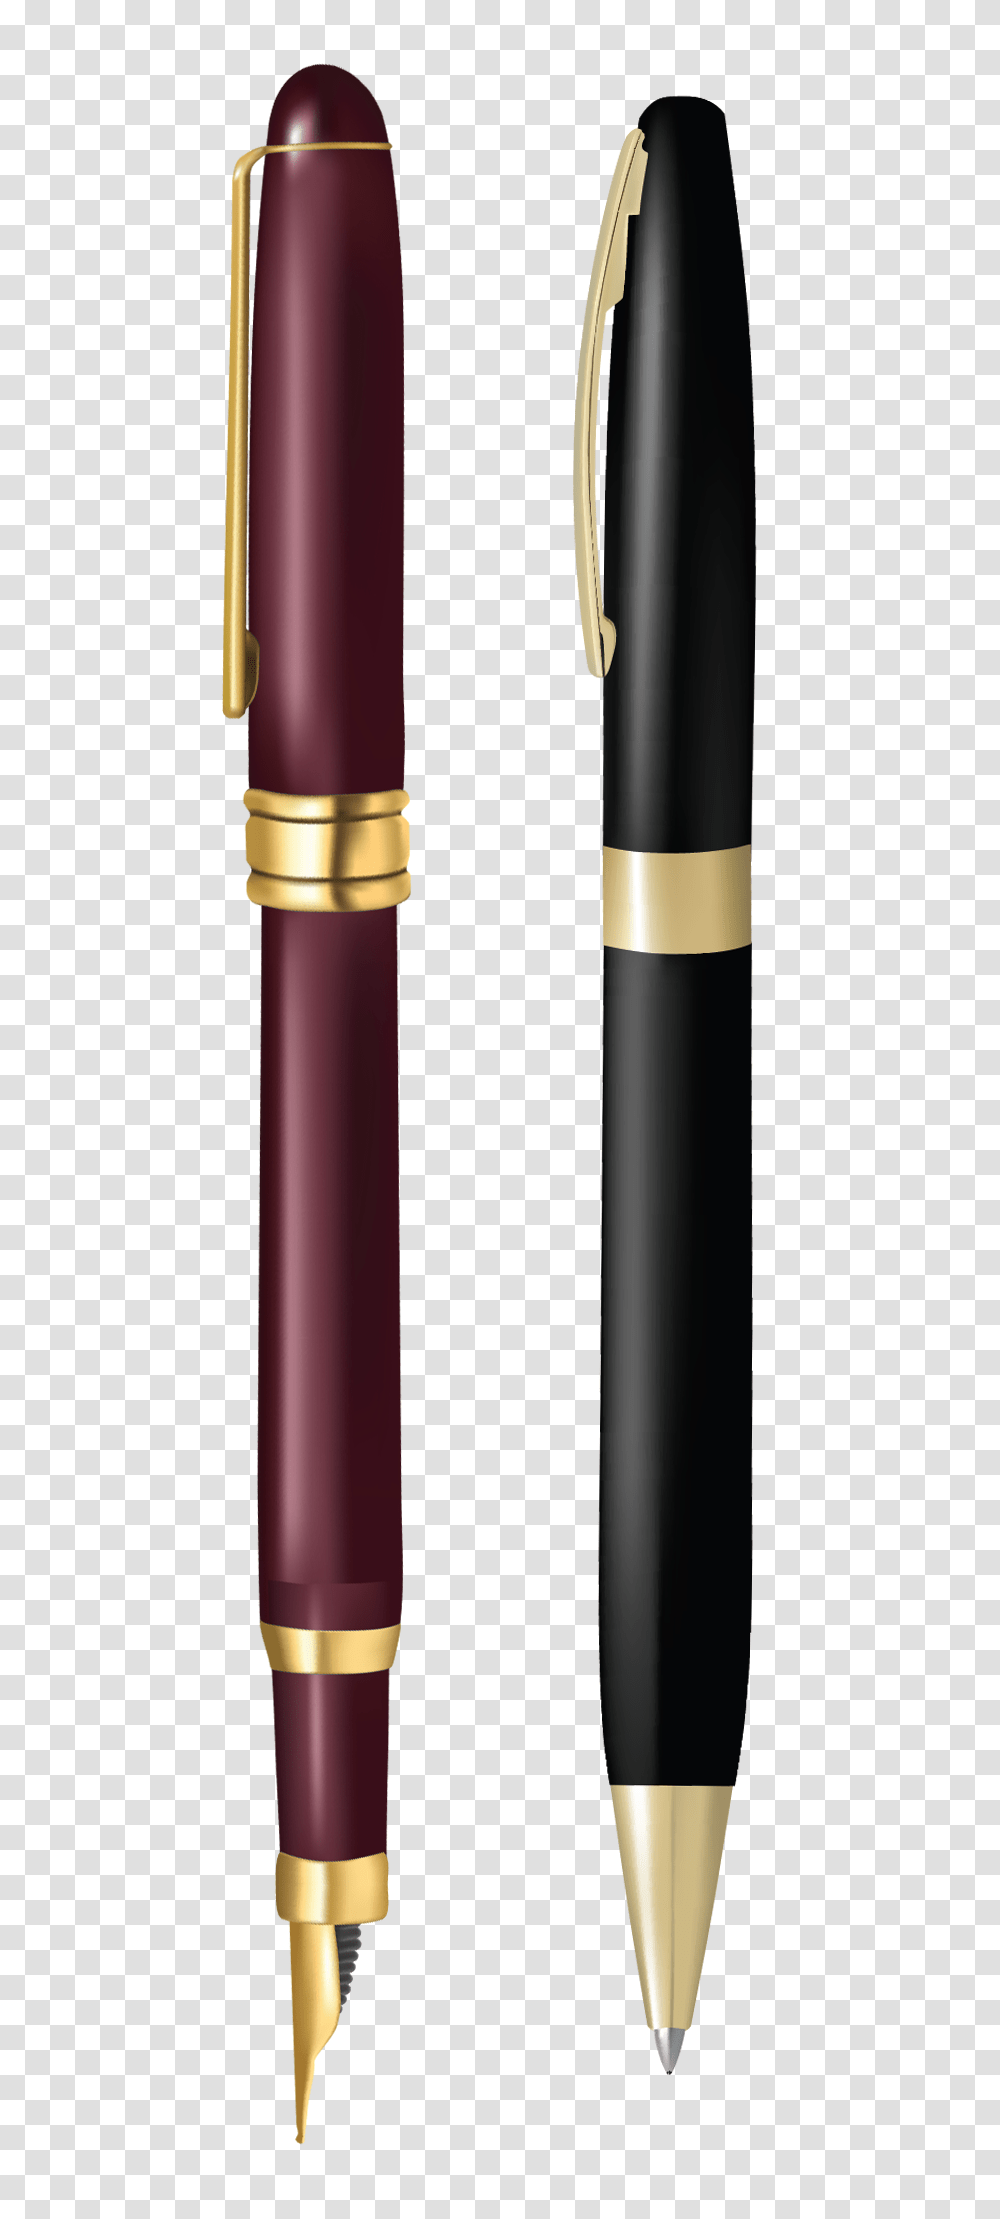 Pen And Ballpoint Pen, Stick, Cane, Pencil, Rubber Eraser Transparent Png